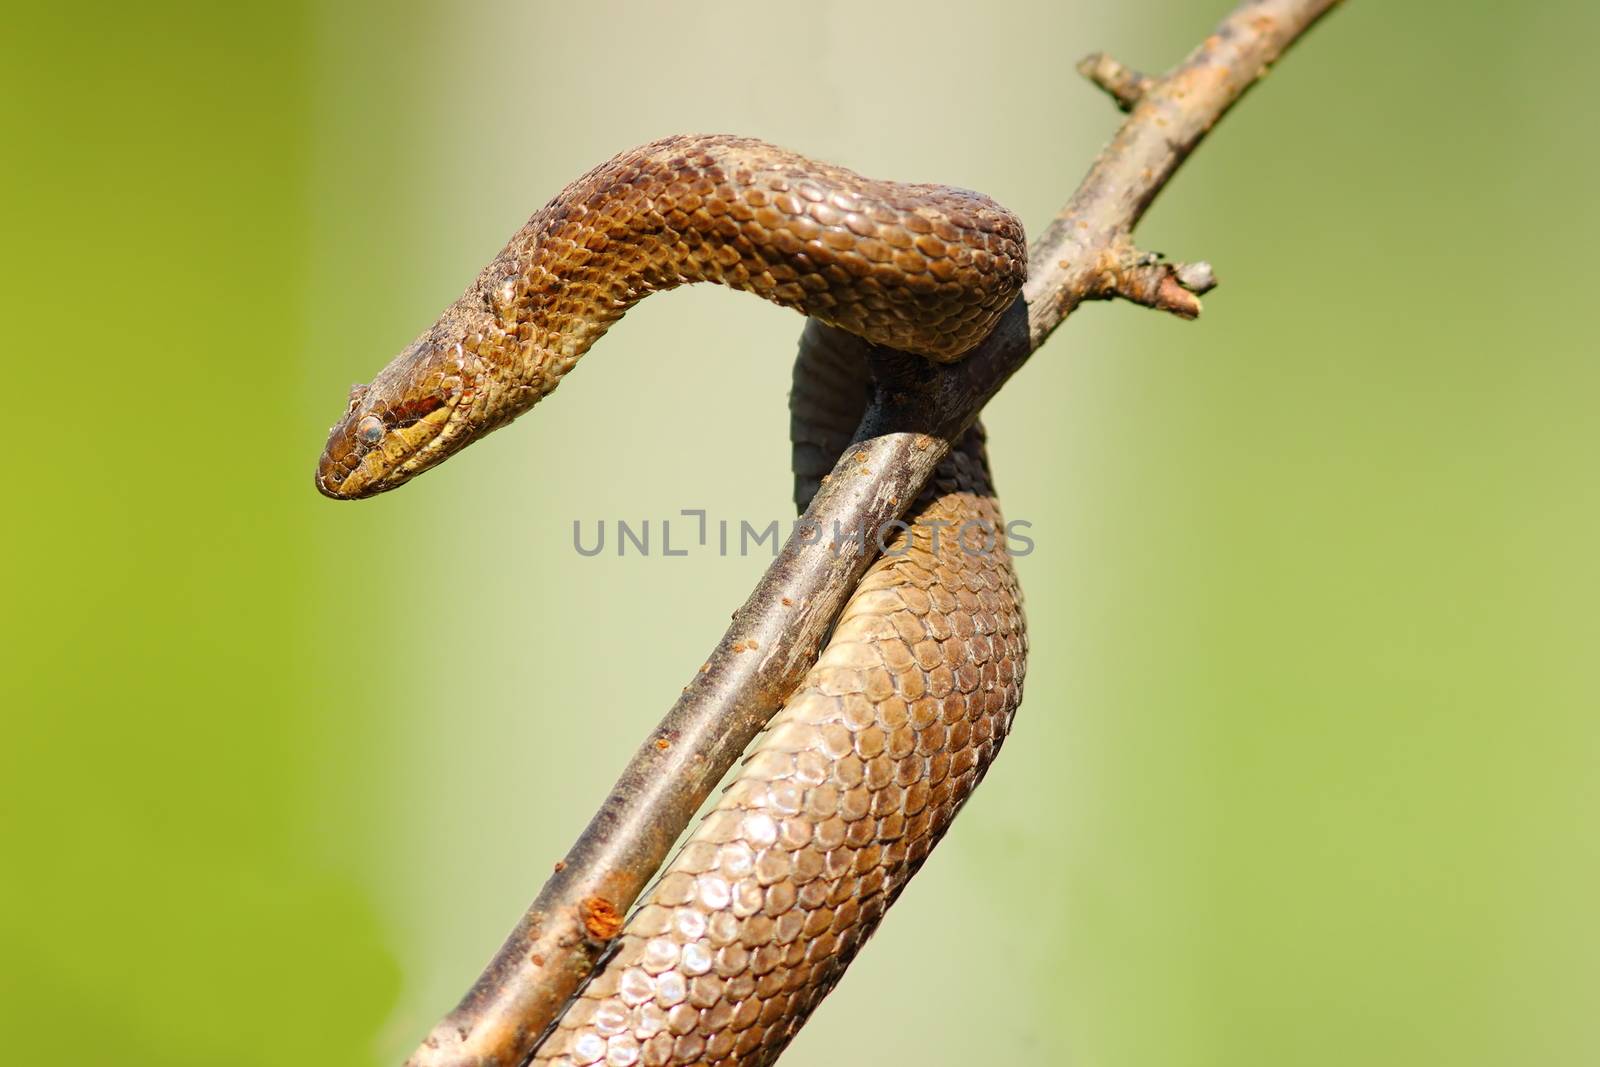 smooth snake hatched after hibernation, climbing on tree branch ( Coronella austriaca )